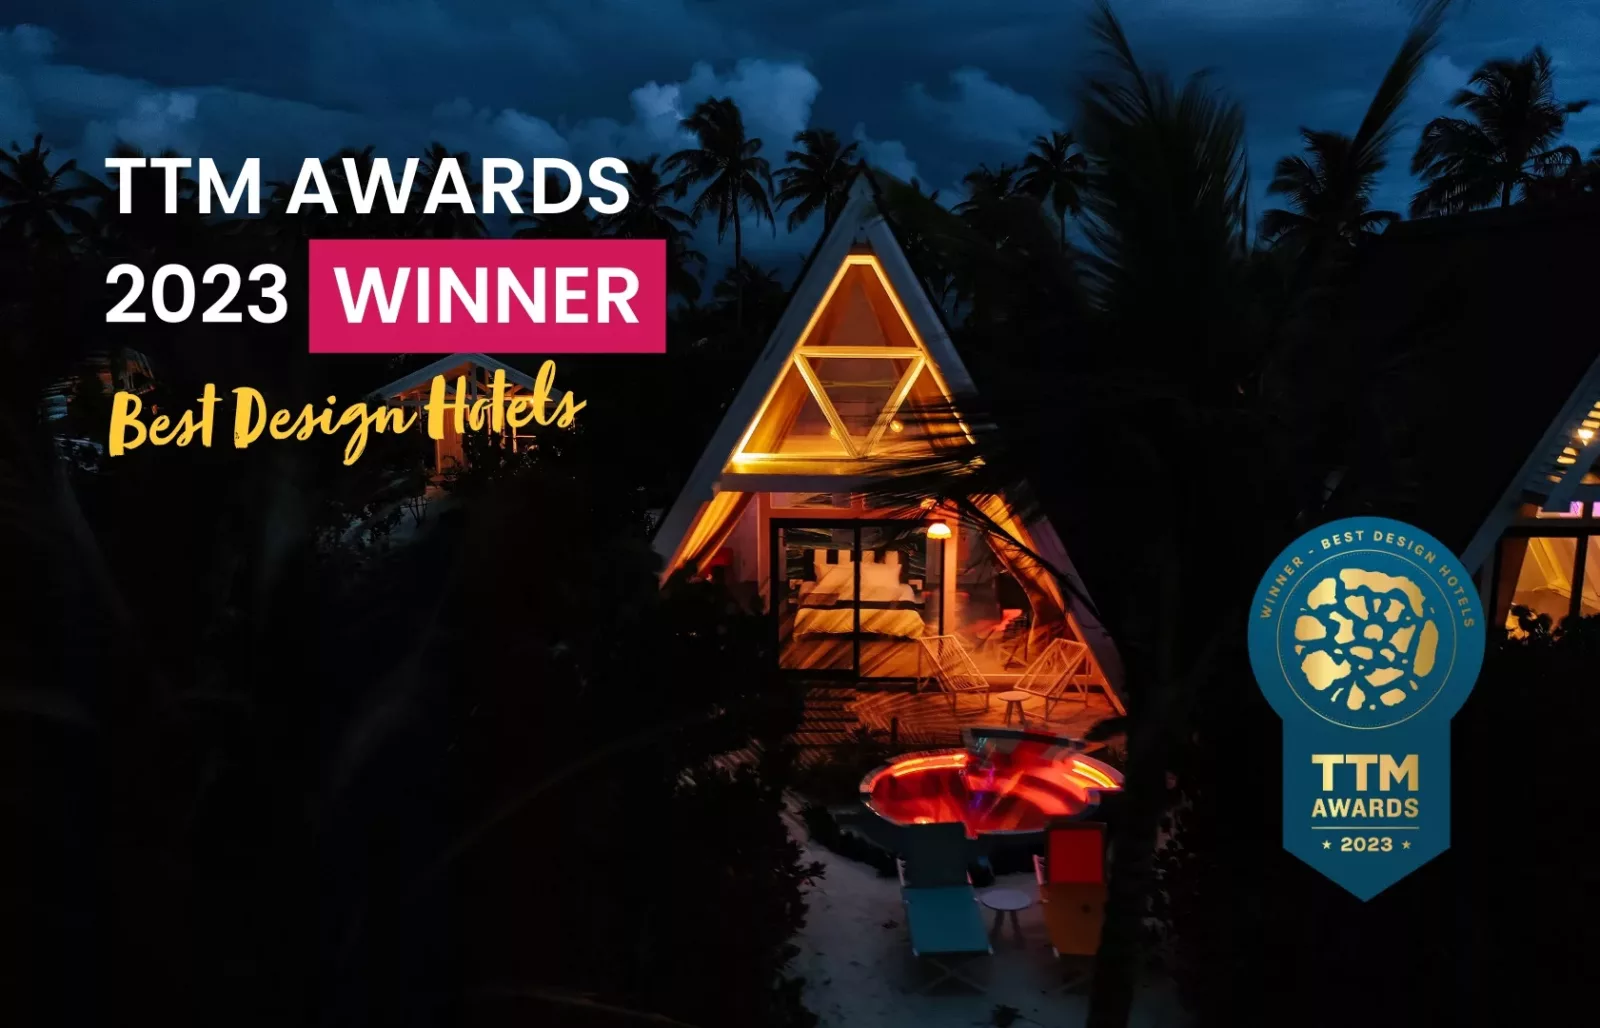 A Celebration of Creativity and Collaboration: Maldives’ Self-Made Oaga Art Resort Wins “Best Design Hotels” by TTM Awards 2023